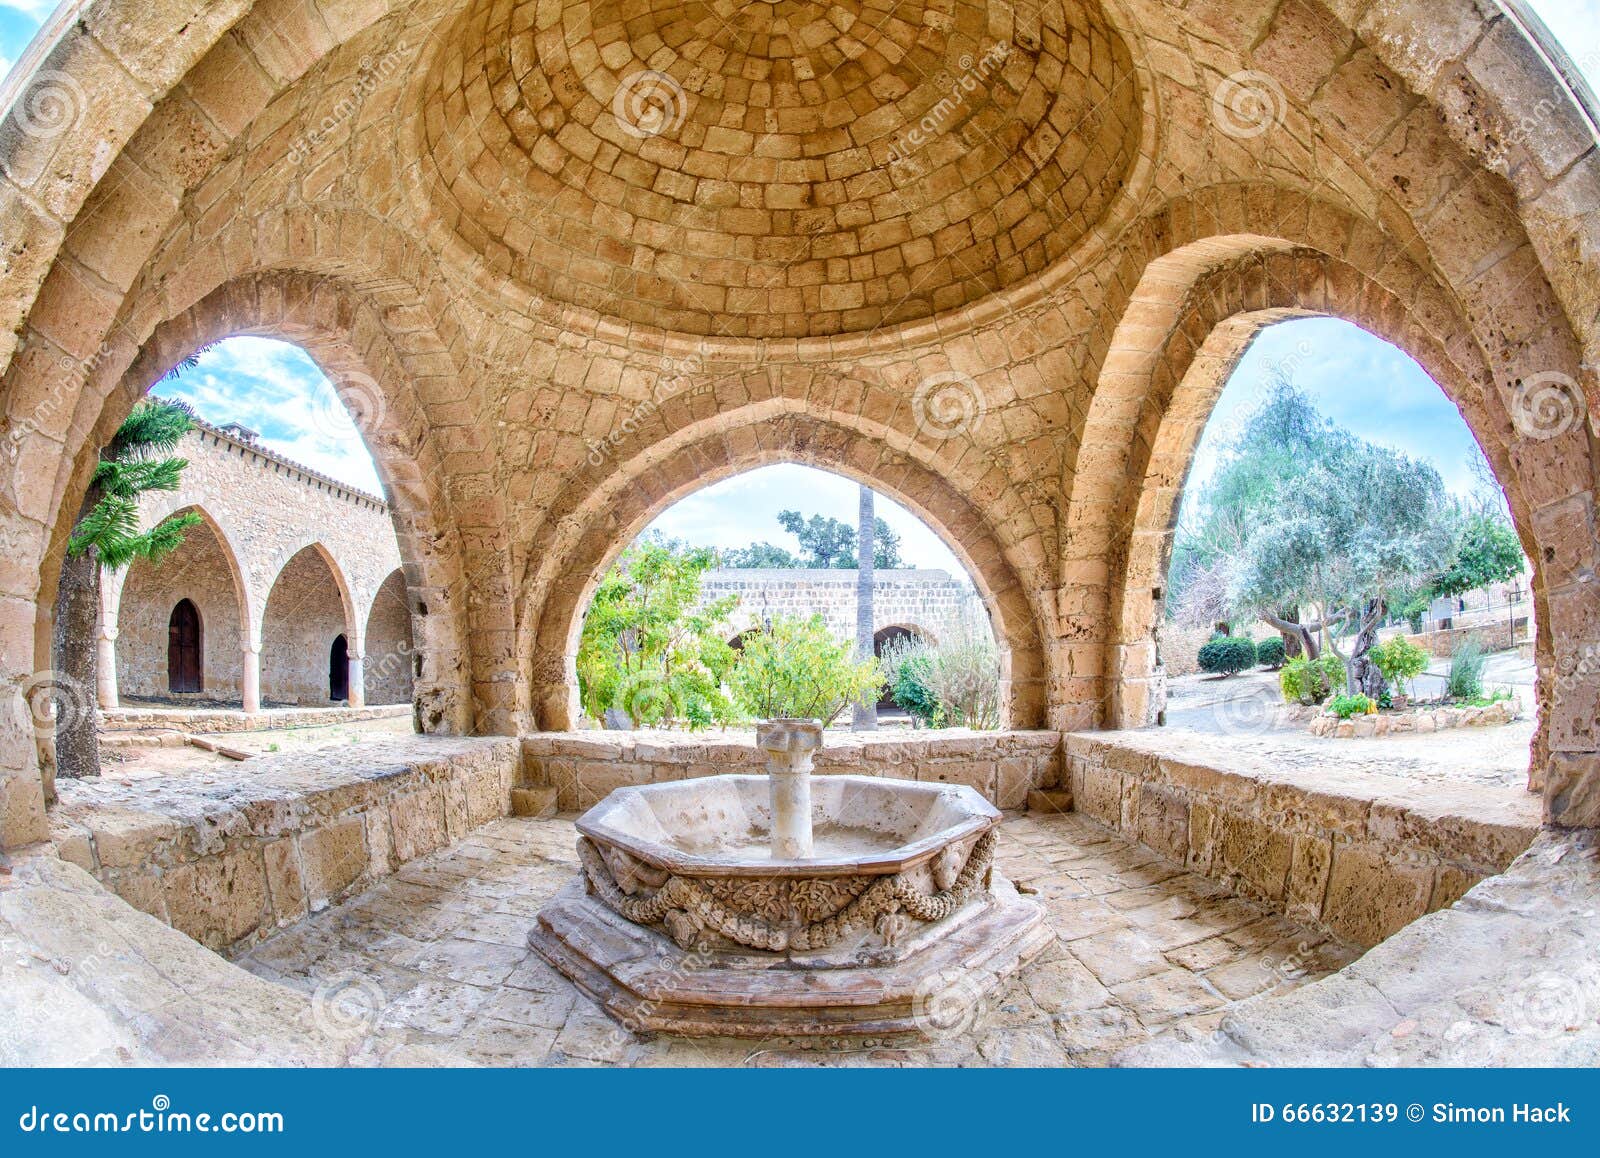 agia napa monastery fountain in cyprus 3